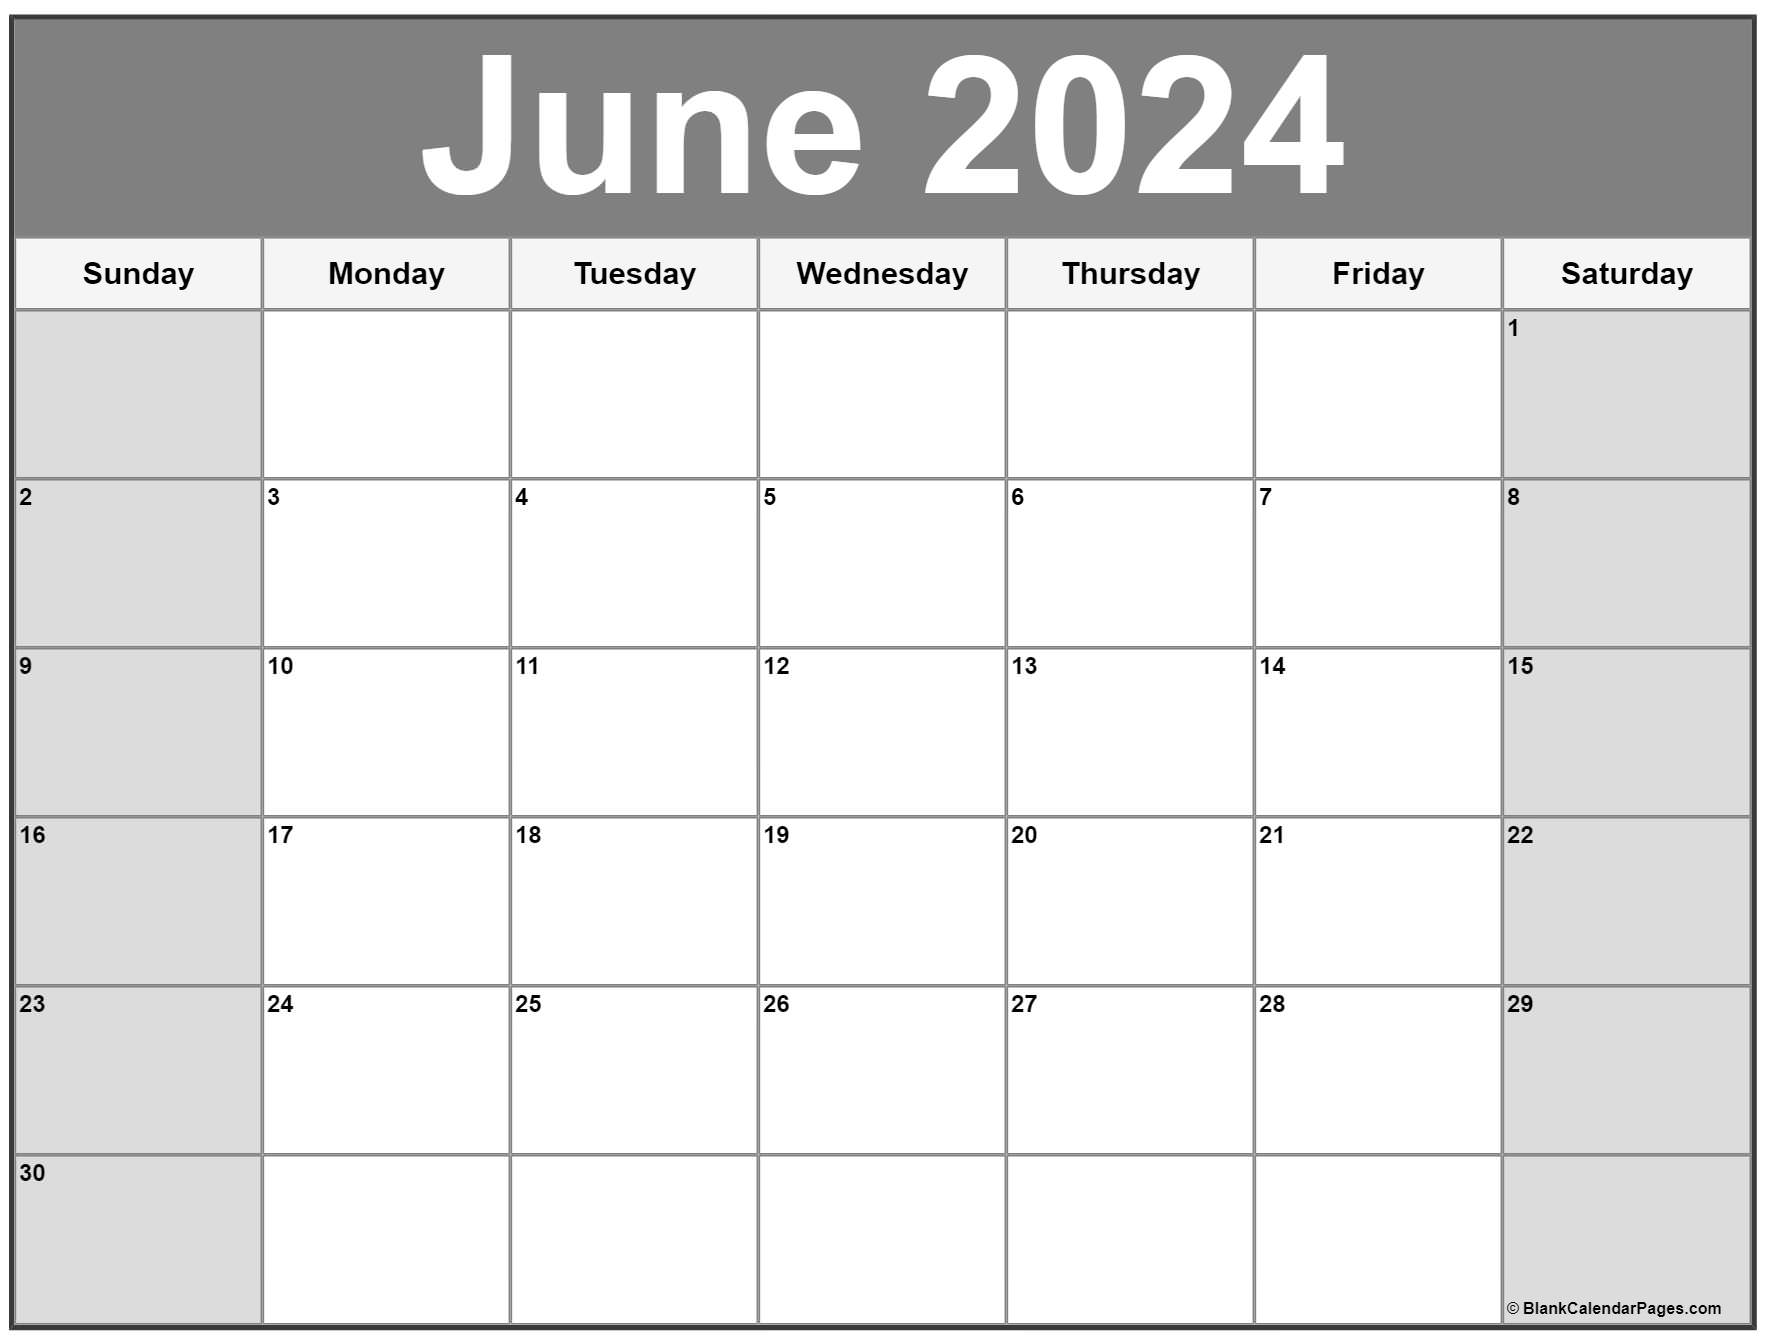 June 2022 calendar | free printable monthly calendars